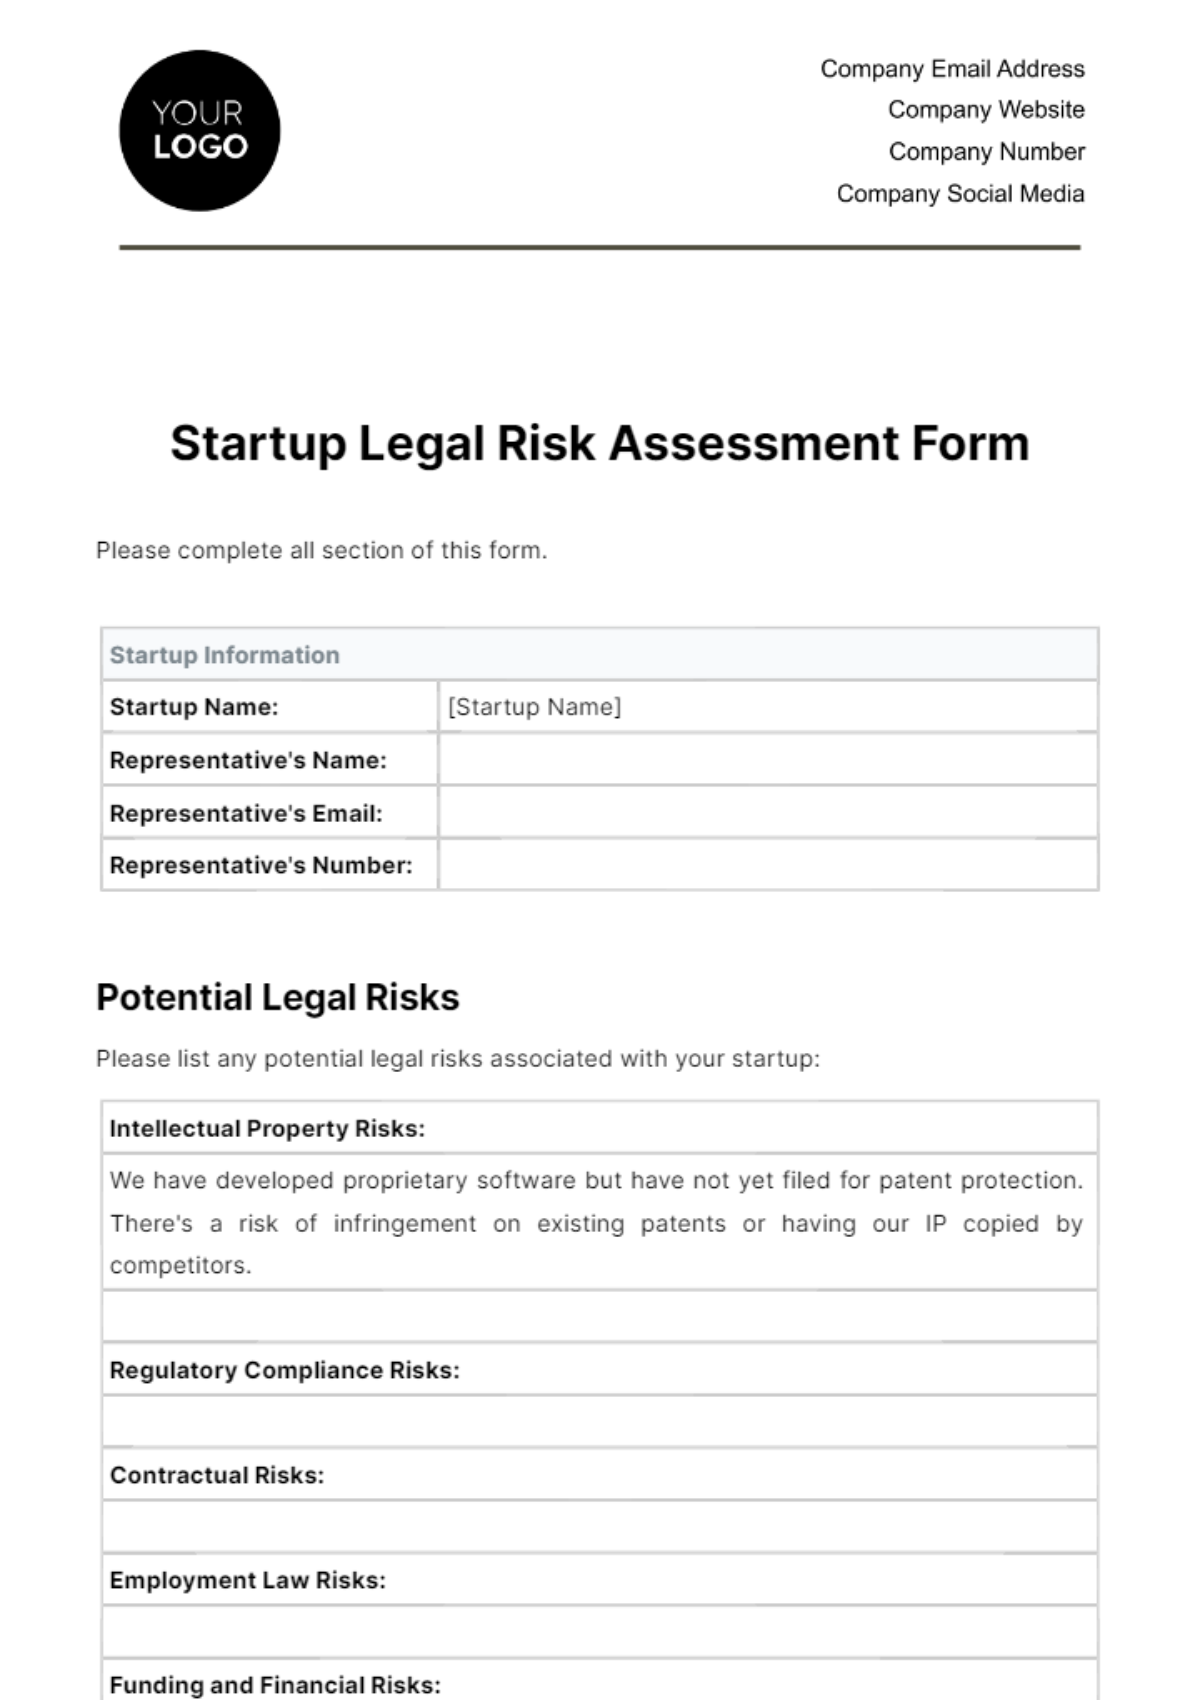 Startup Legal Risk Assessment Form Template